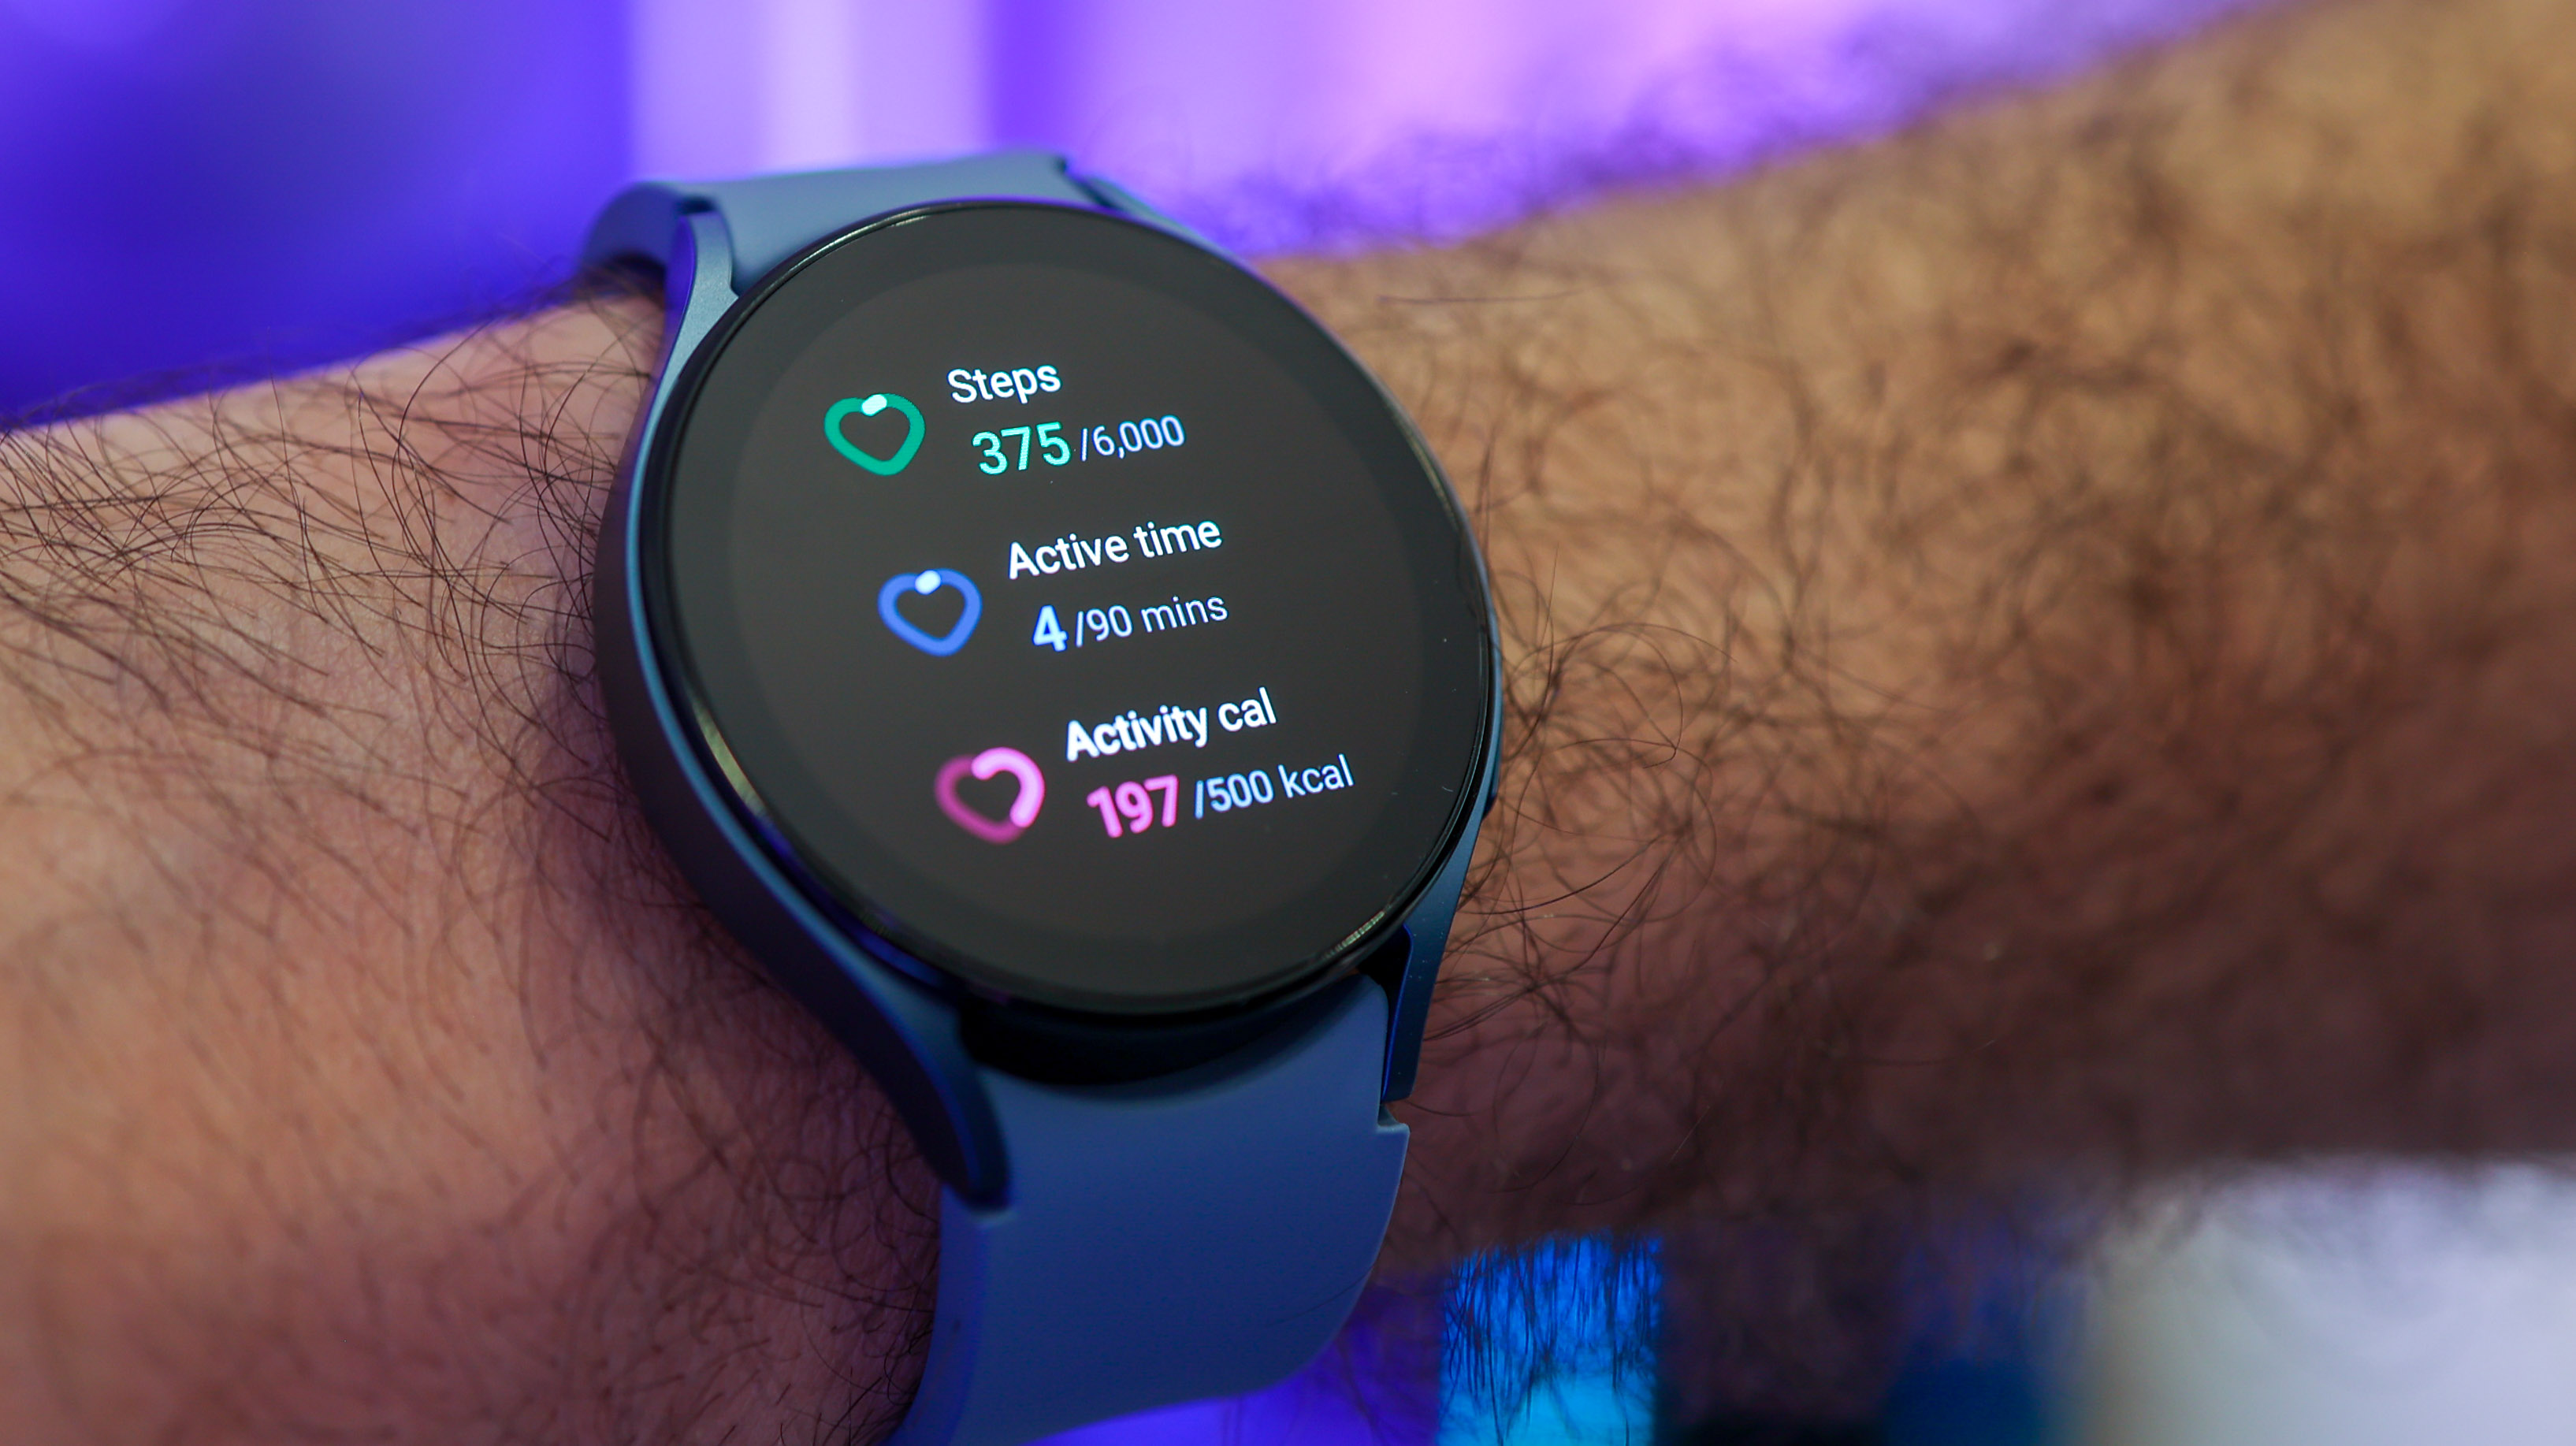 Samsung Galaxy Watch 5 hands on fitness info